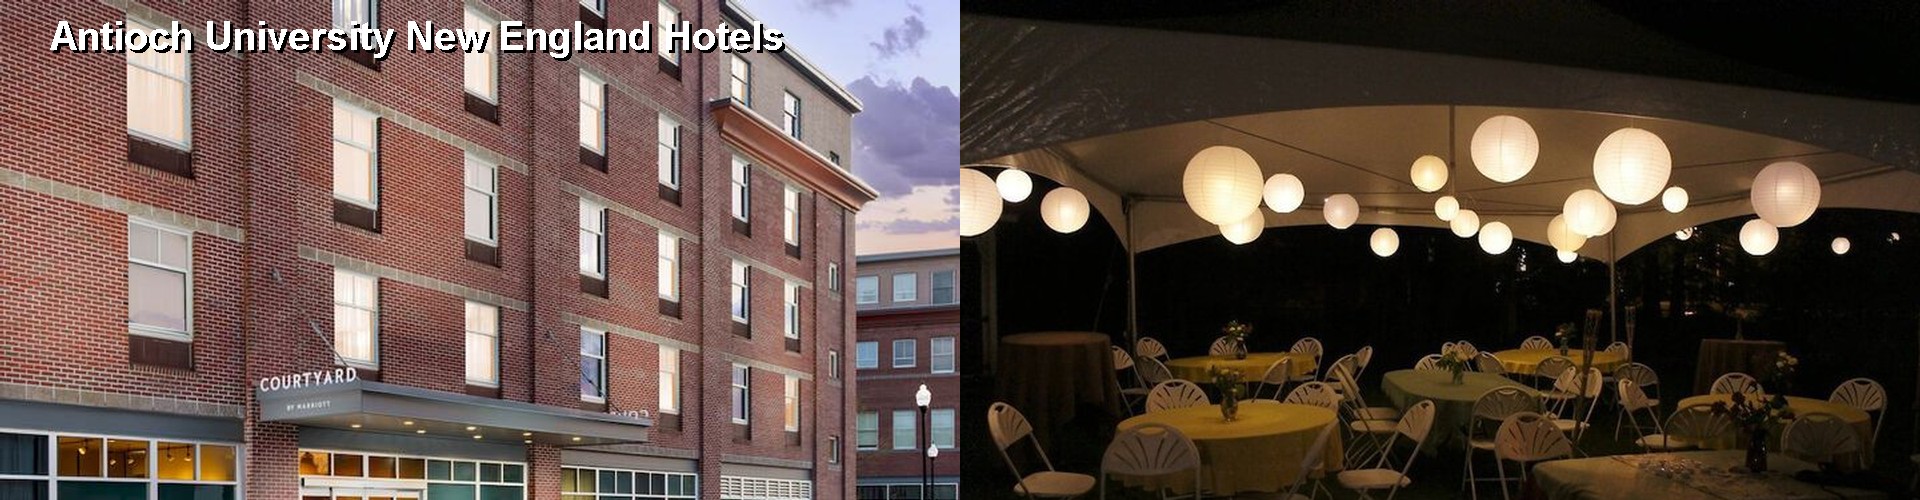 5 Best Hotels near Antioch University New England